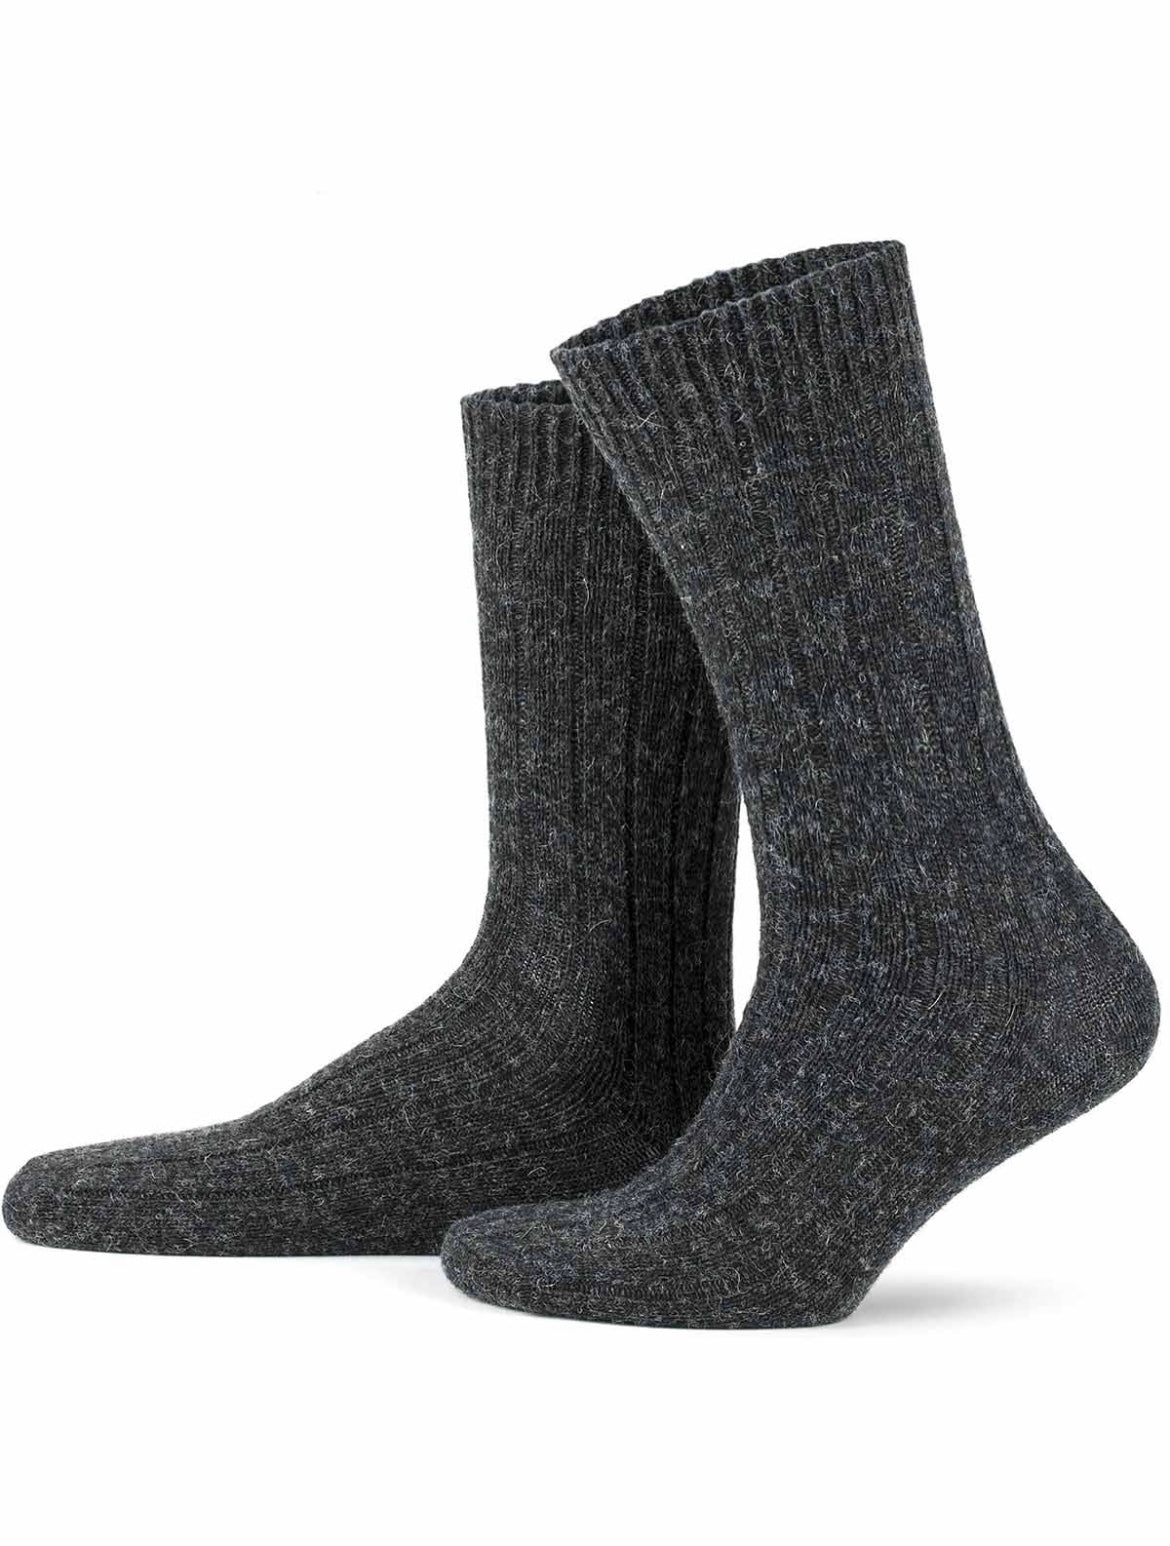 Alpaca Wool Men’s Socks